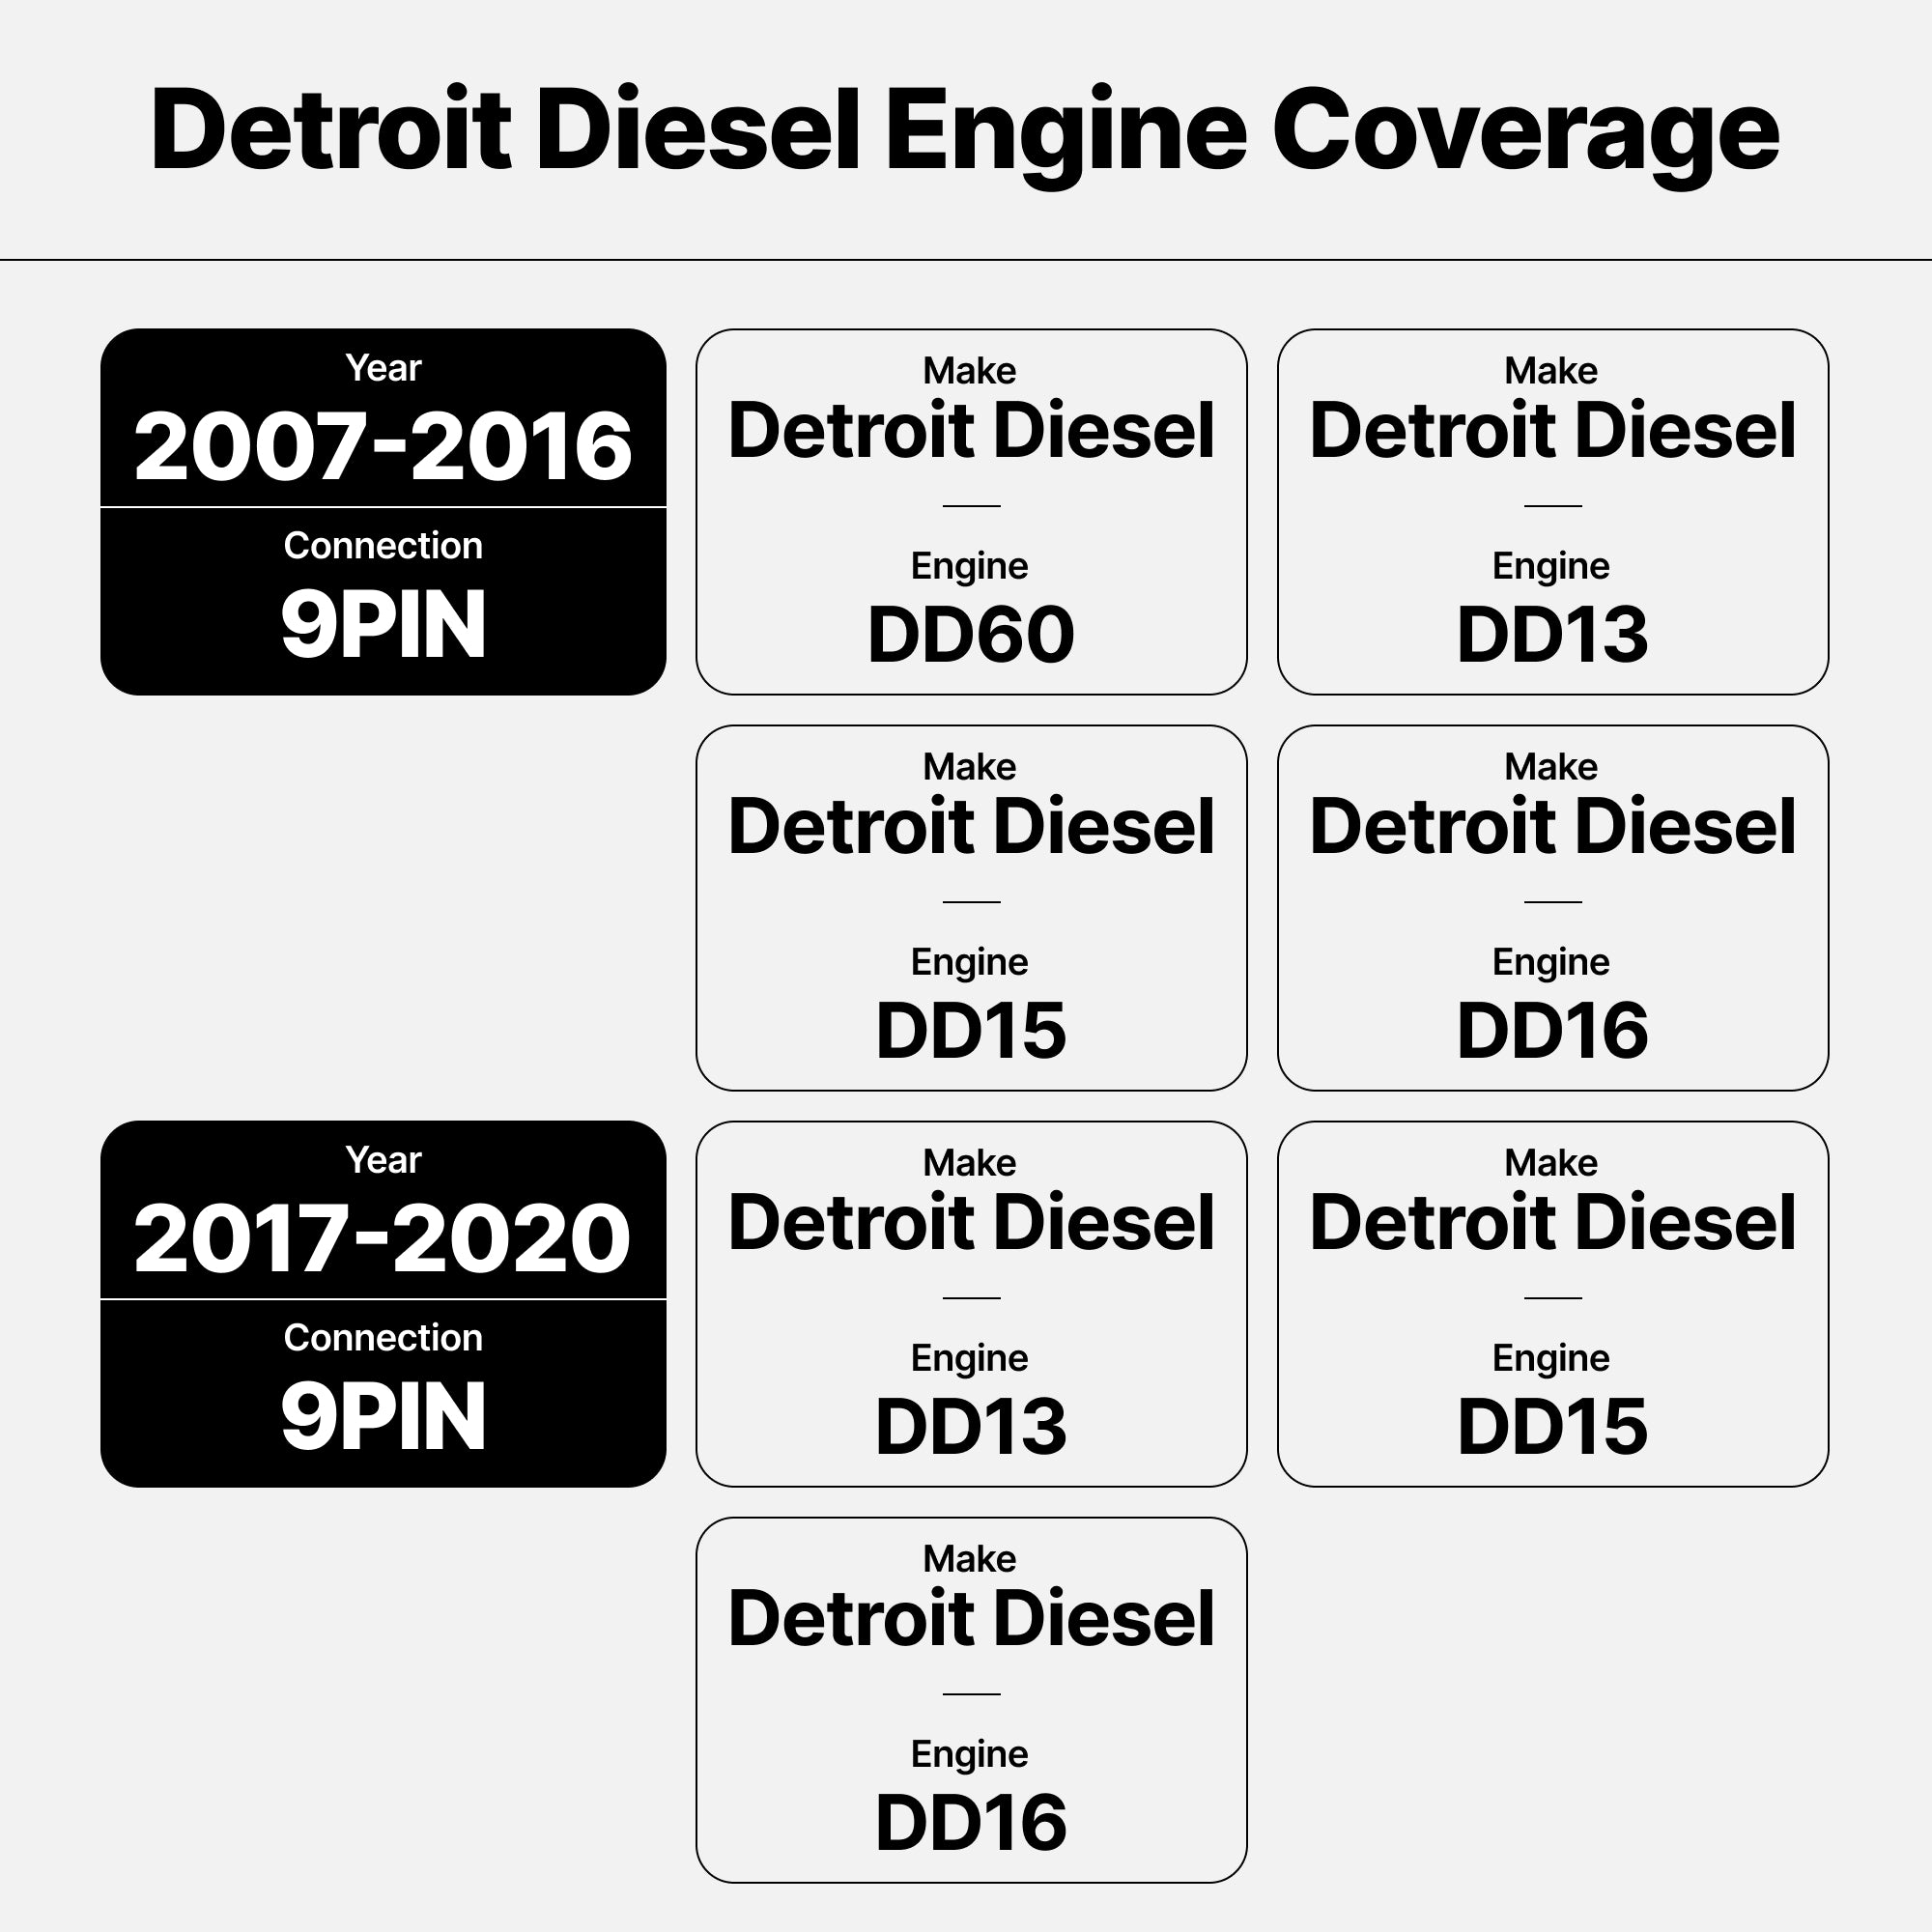 OTR Reset Tool | Detroit Diesel